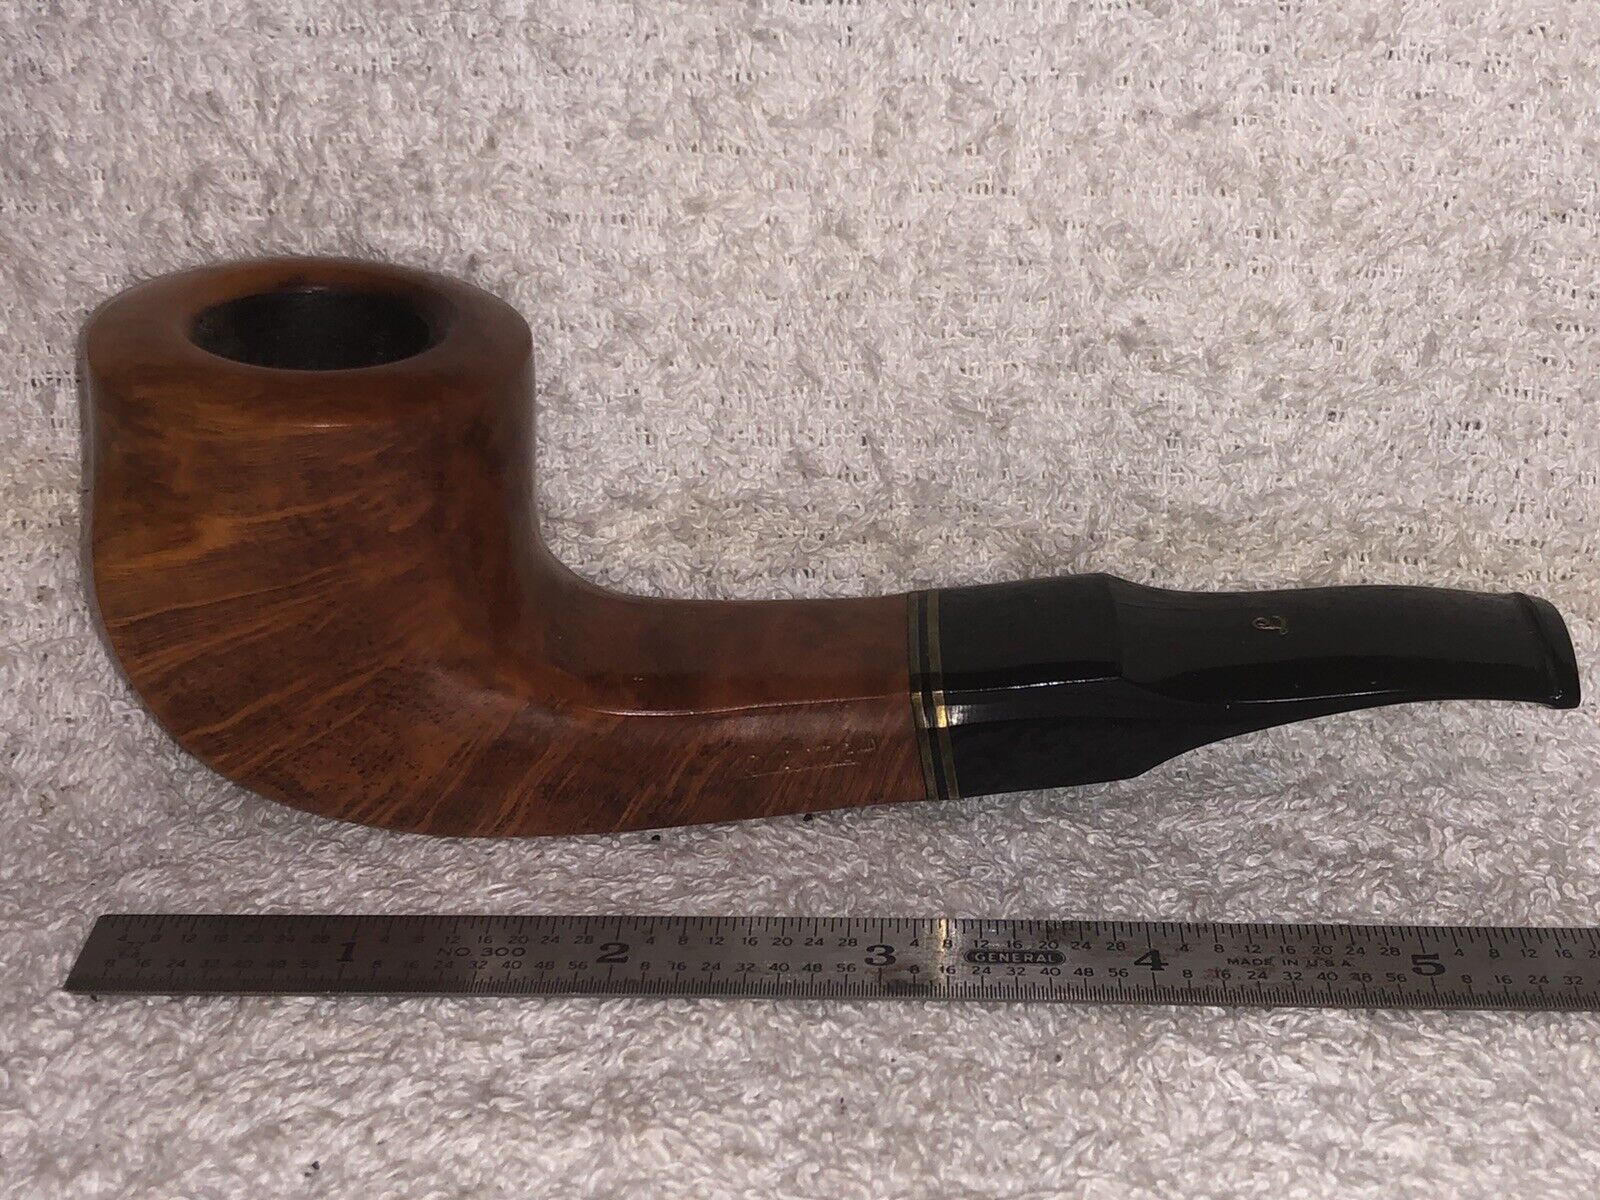 1996), Lorenzo, Spumante, Tobacco Smoking Pipe, Estate, 9mm, 00264